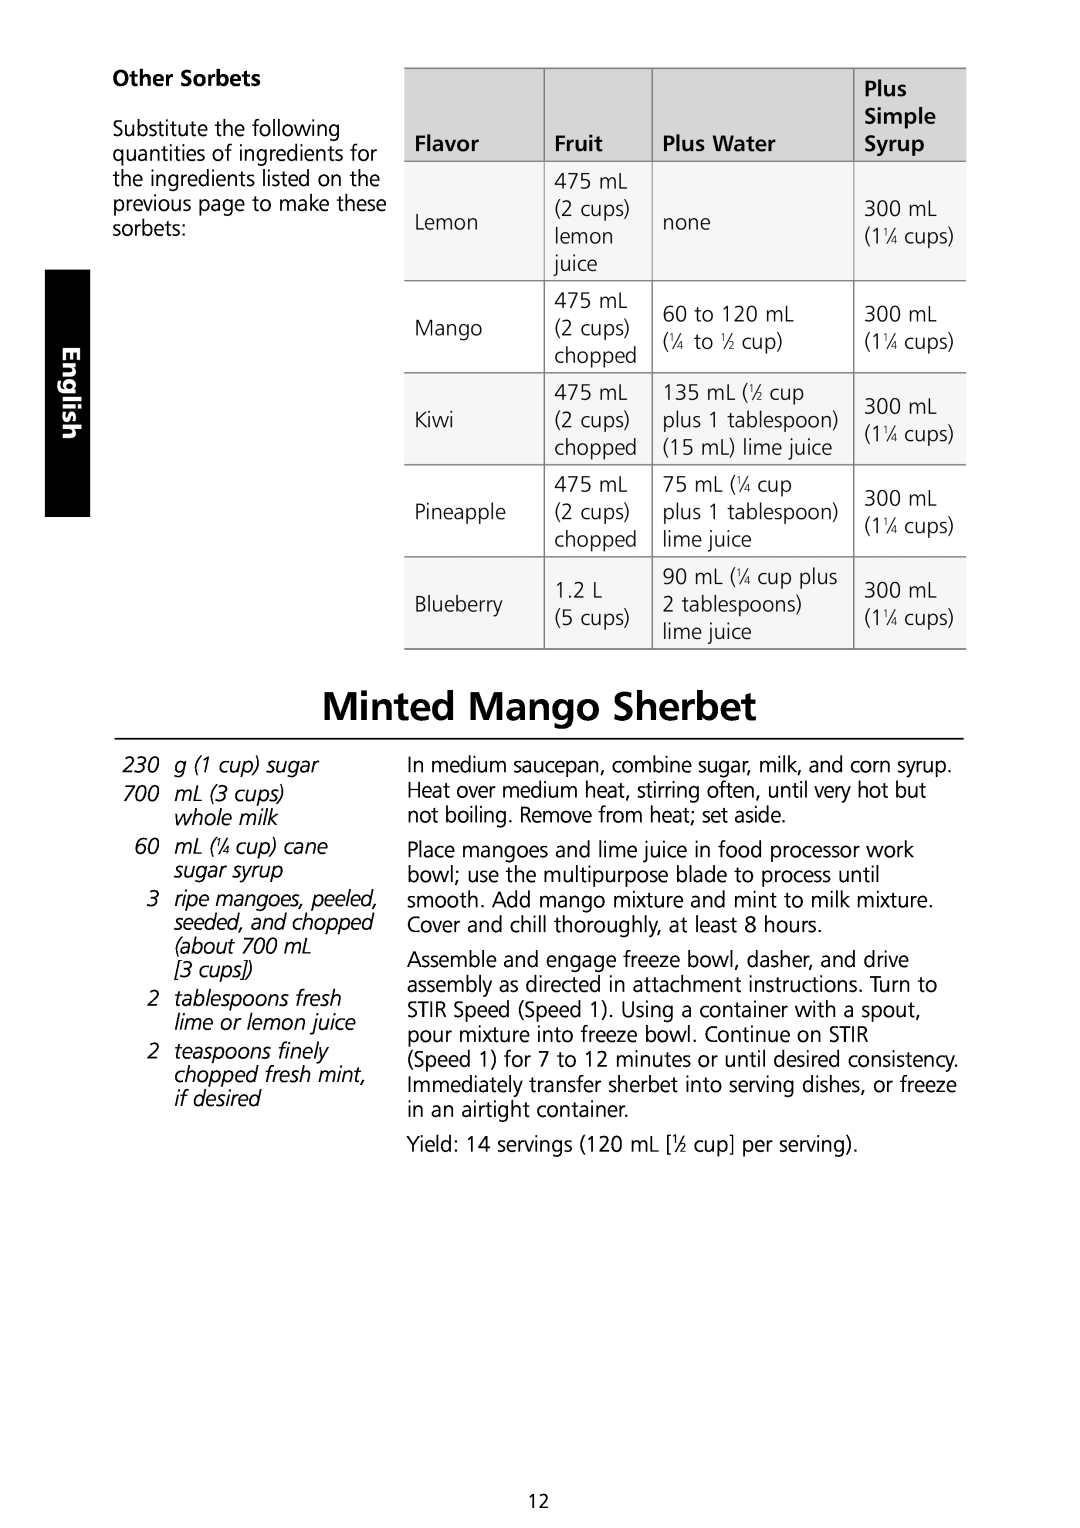 KitchenAid 5KICA0WH manual Minted Mango Sherbet, English, 230 g 1 cup sugar 700 mL 3 cups whole milk 